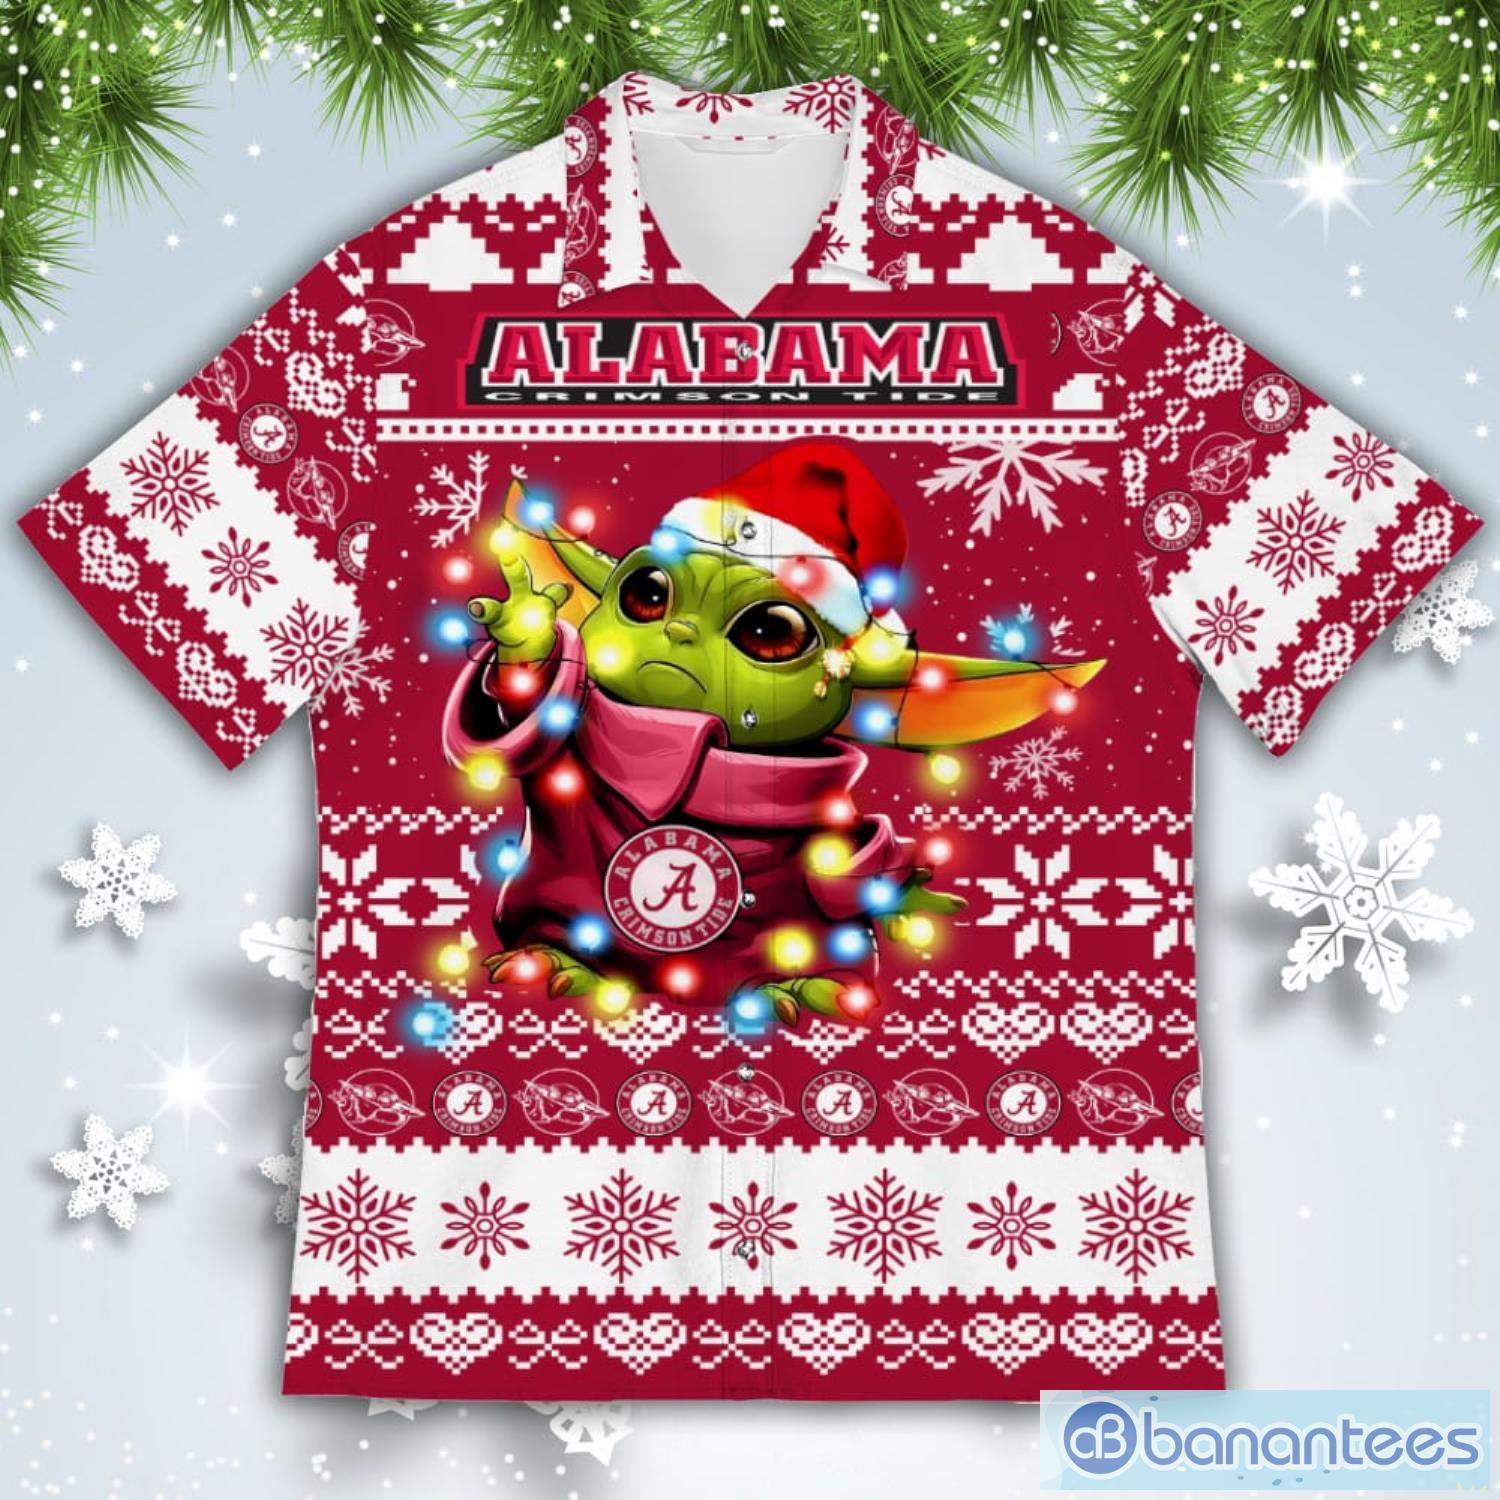 Alabama Crimson Tide Baby Yoda Star Wars American Ugly Christmas Sweater Pattern Hawaiian Shirt Product Photo 2